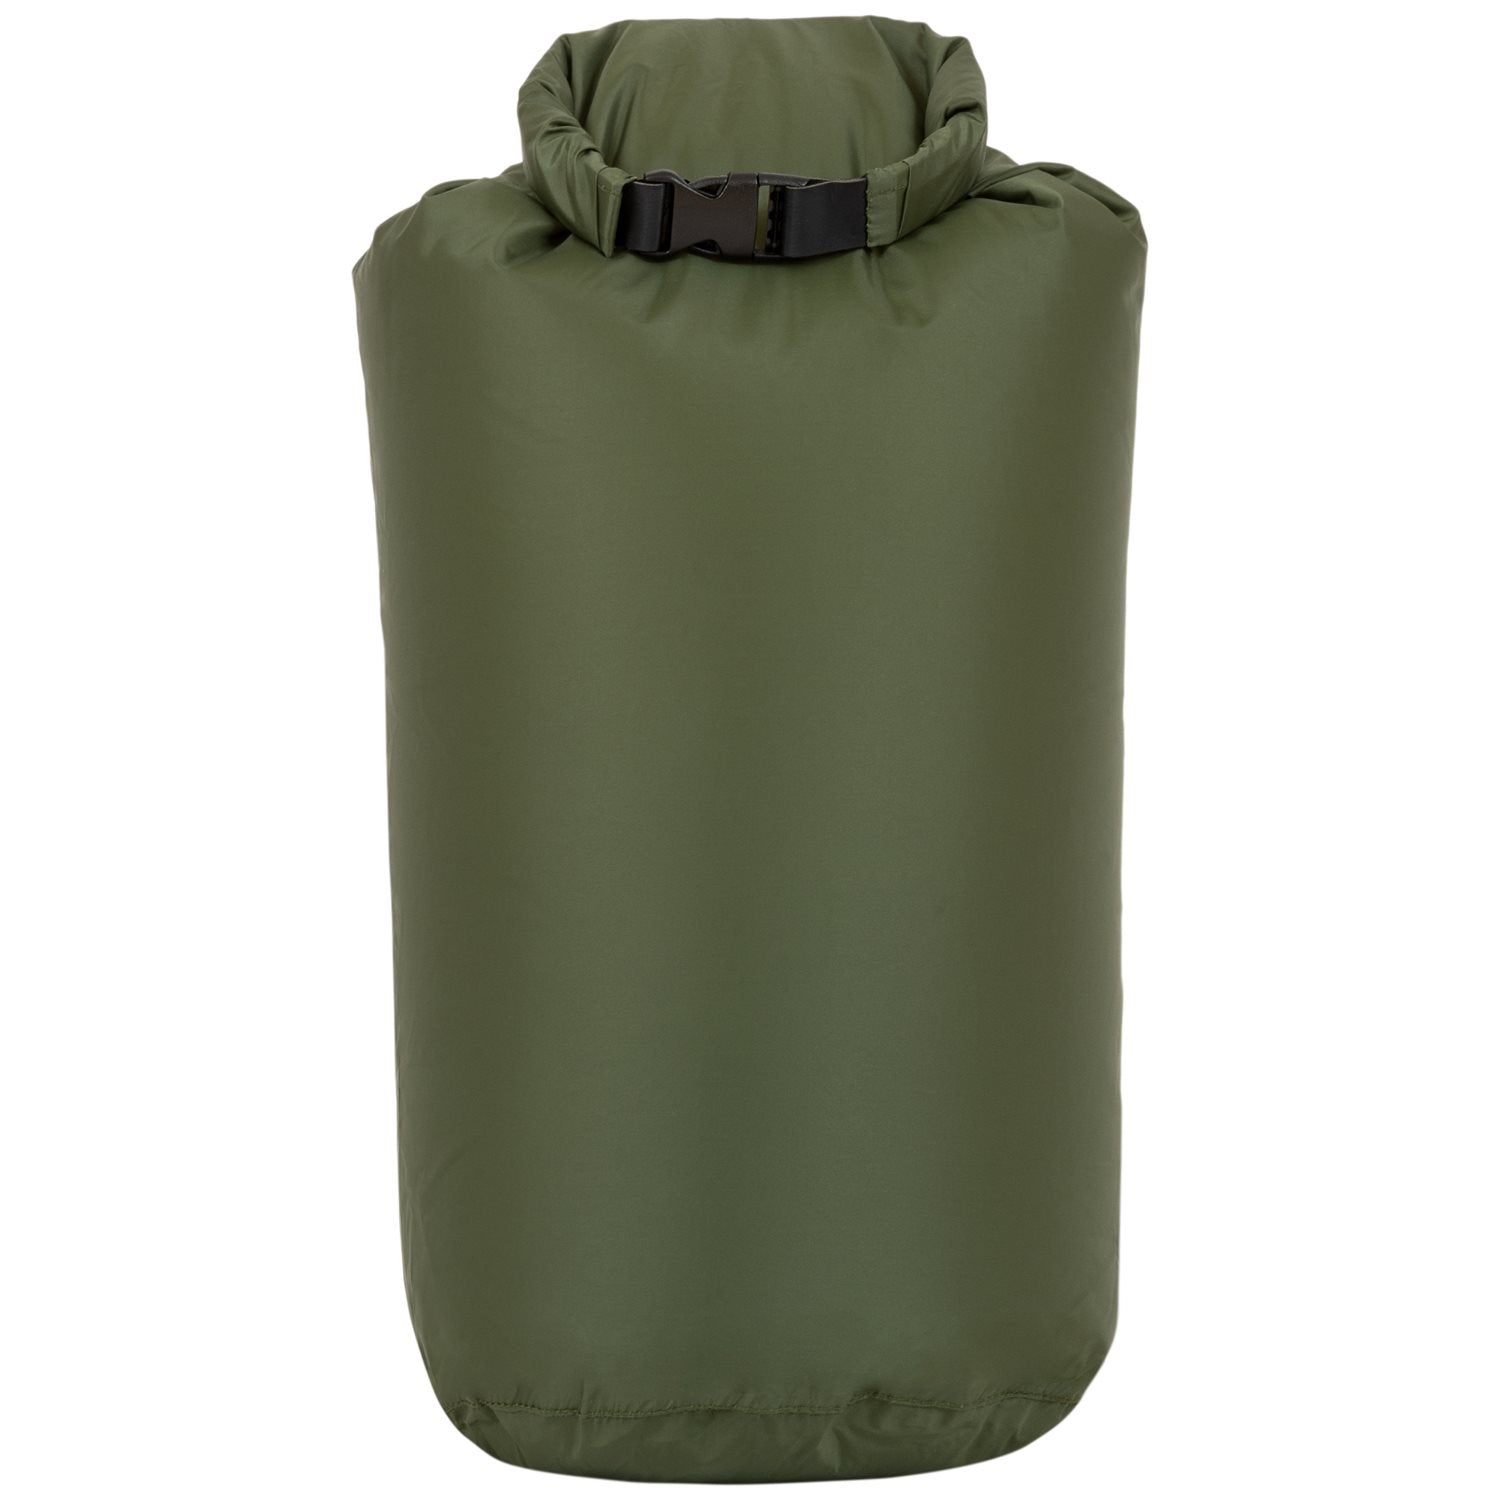 Highlander Drysack Pouch - 13L - Olive Green Drybag - Reisartikelen-nl